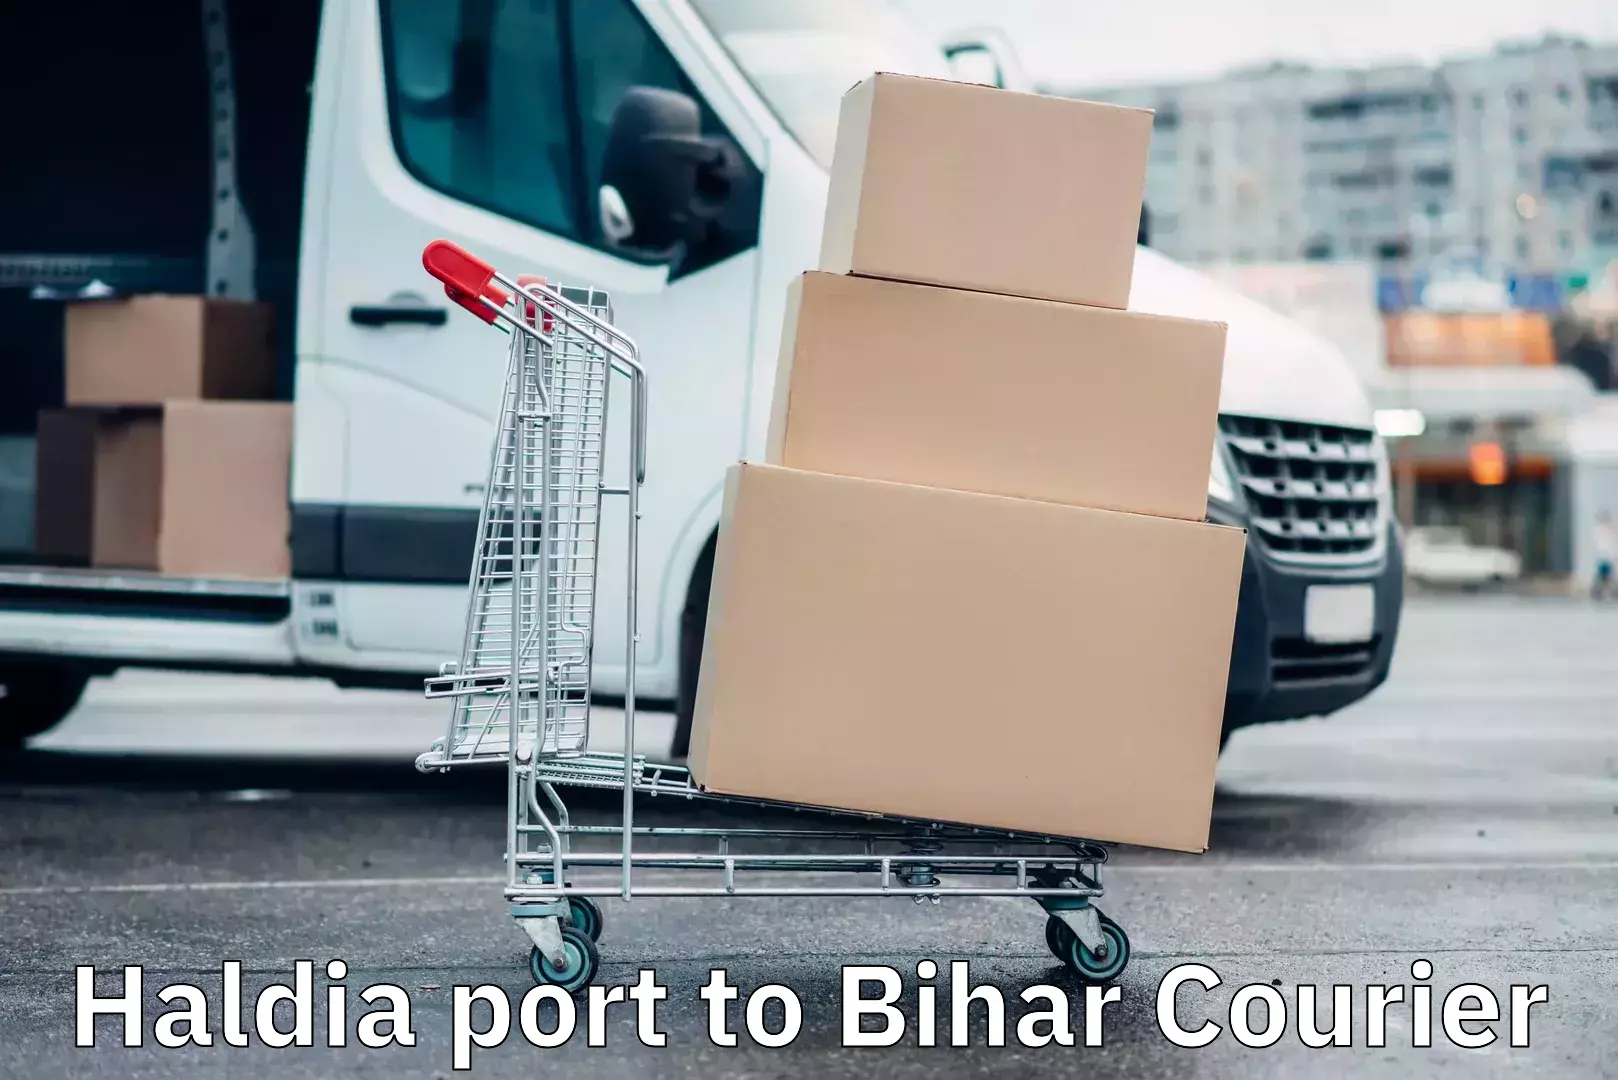 Quick booking process Haldia port to Bihar